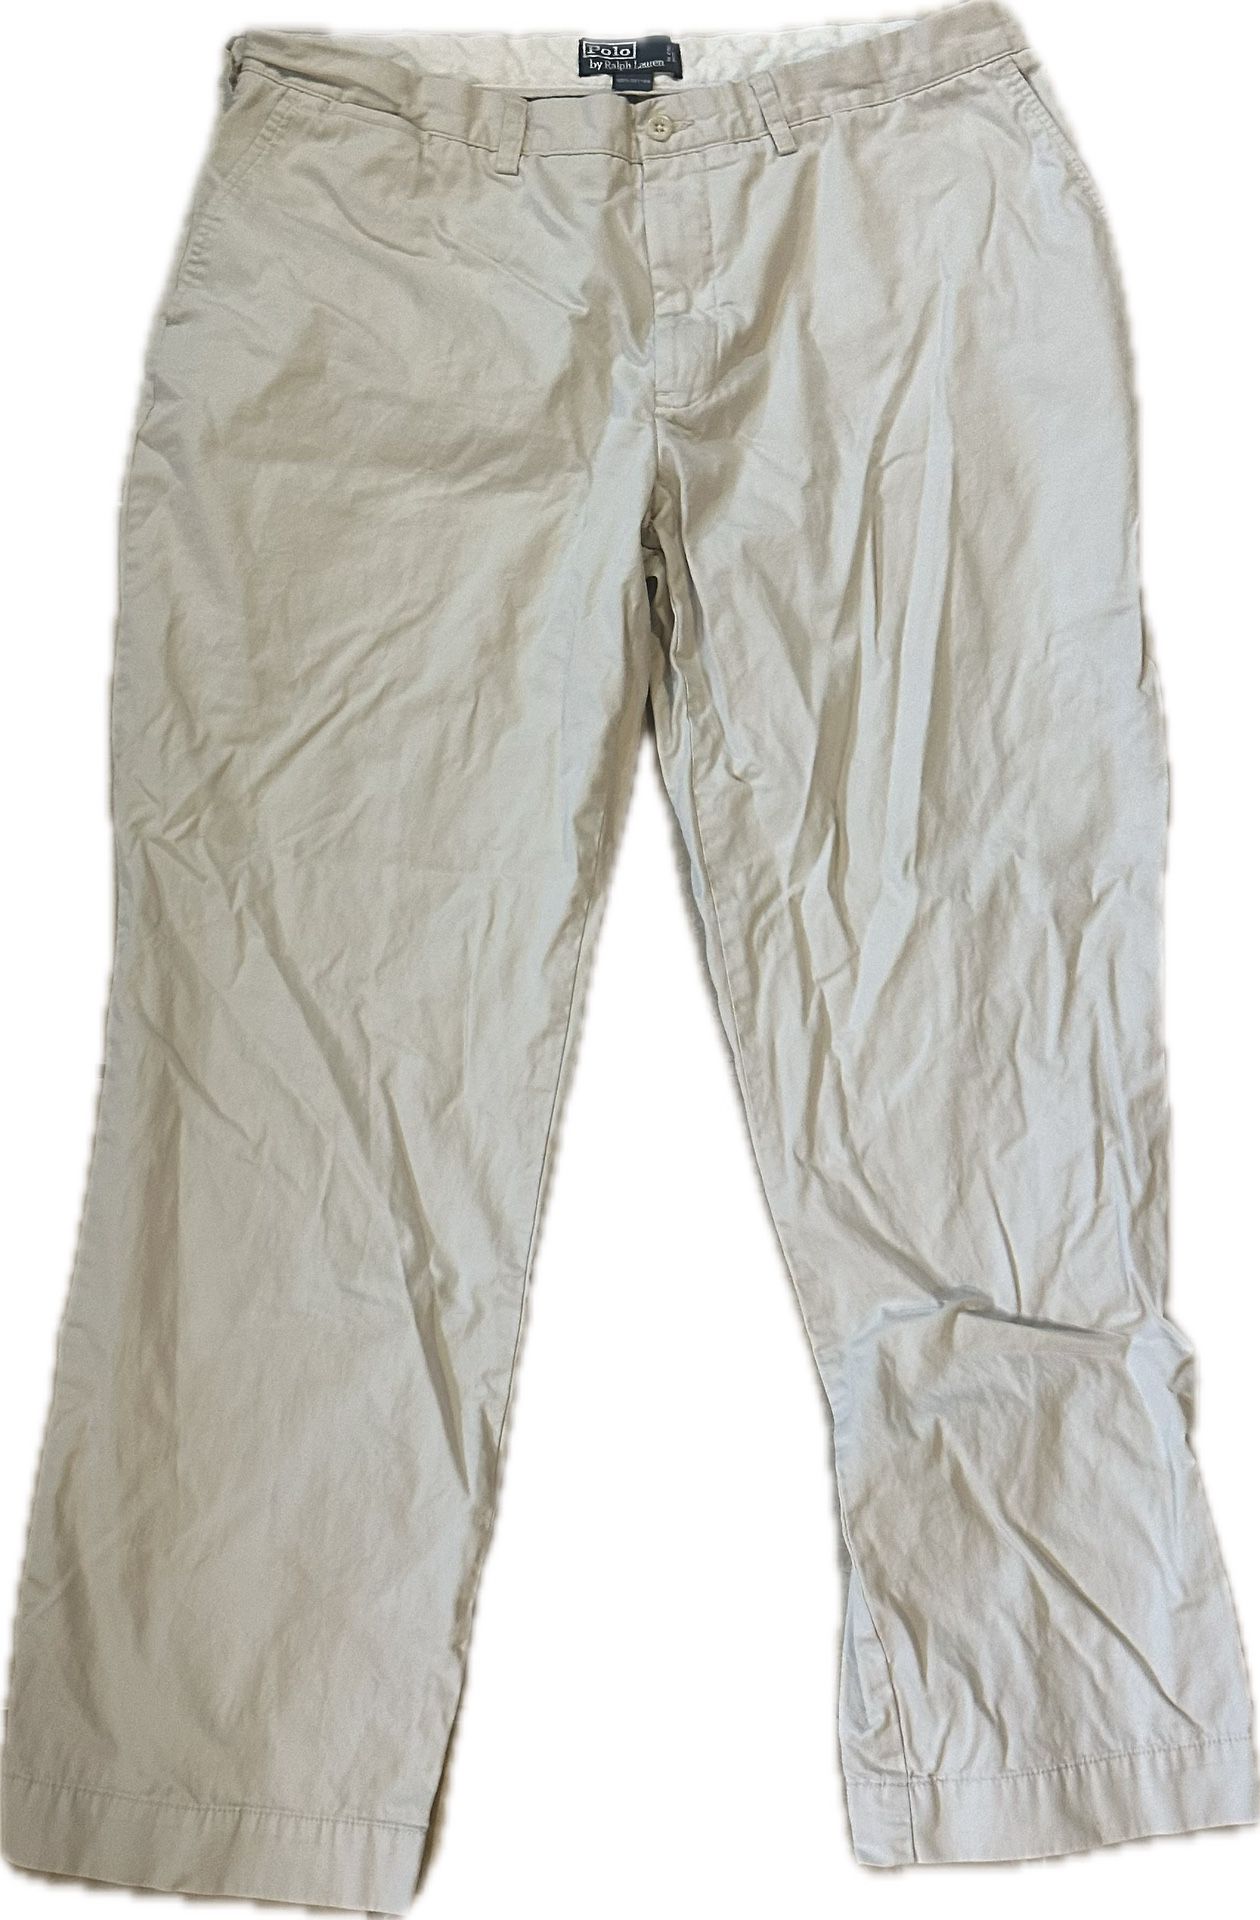 Polo Ralph Lauren Pants